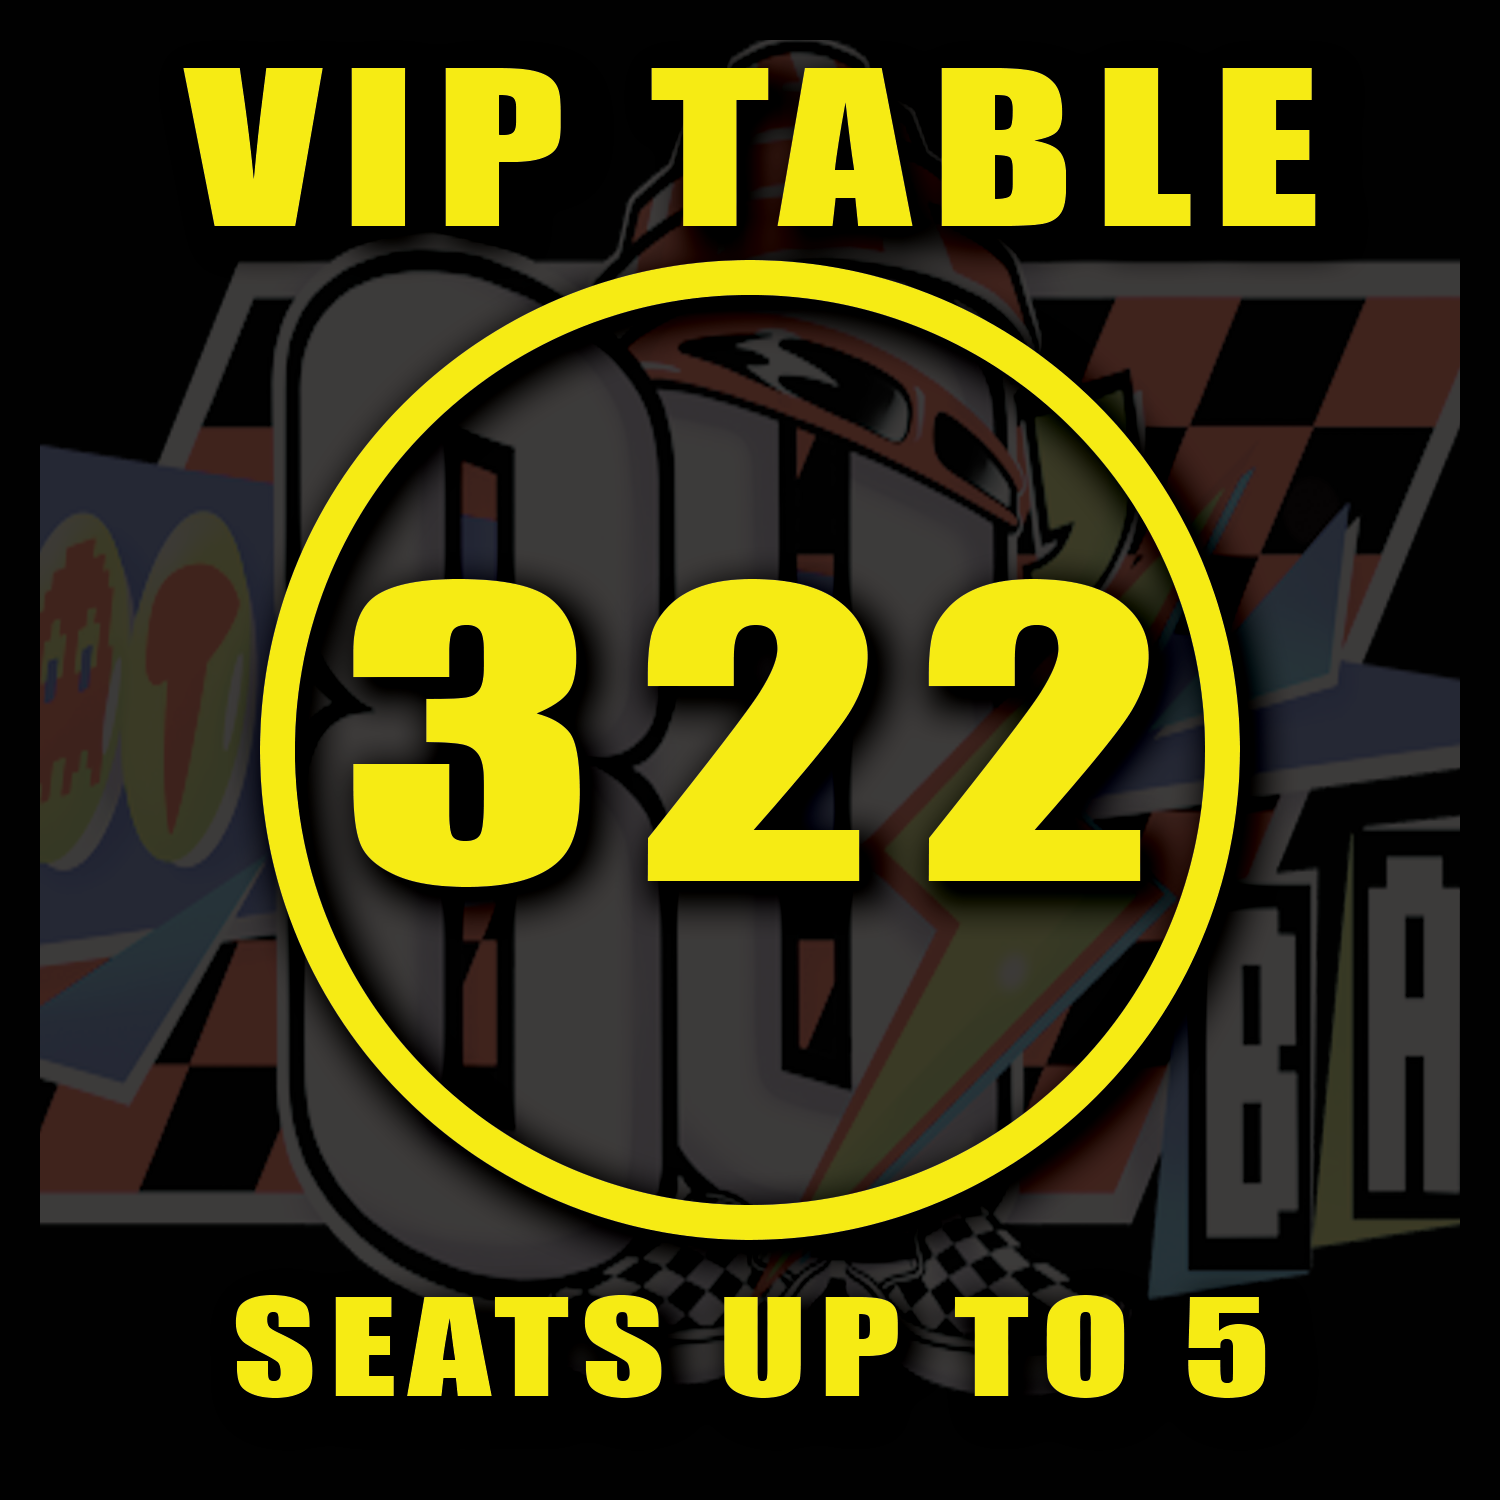 VIP TABLE 322